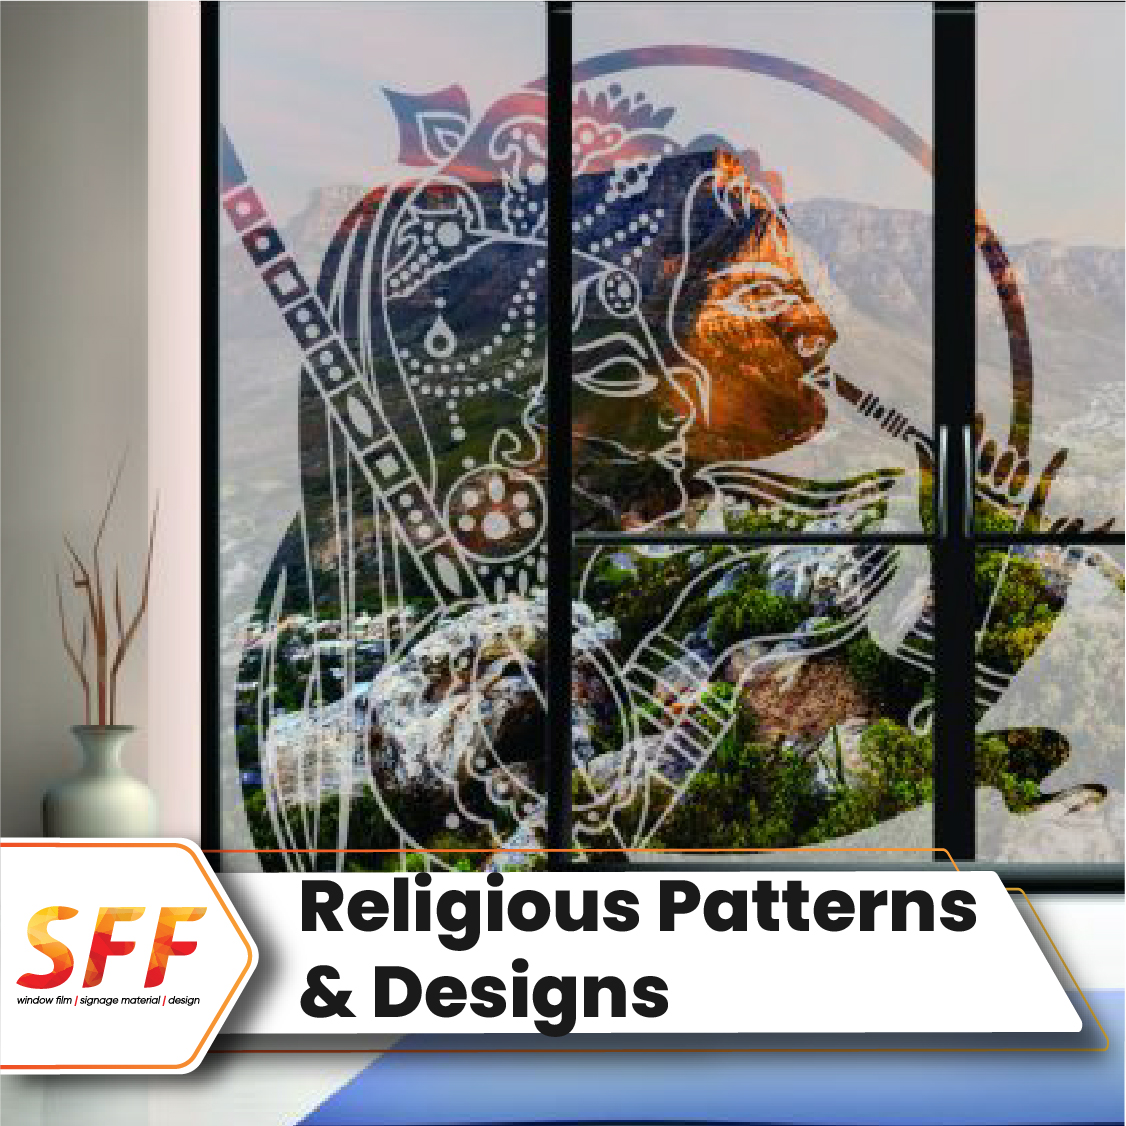 Religious Patterns & Designs